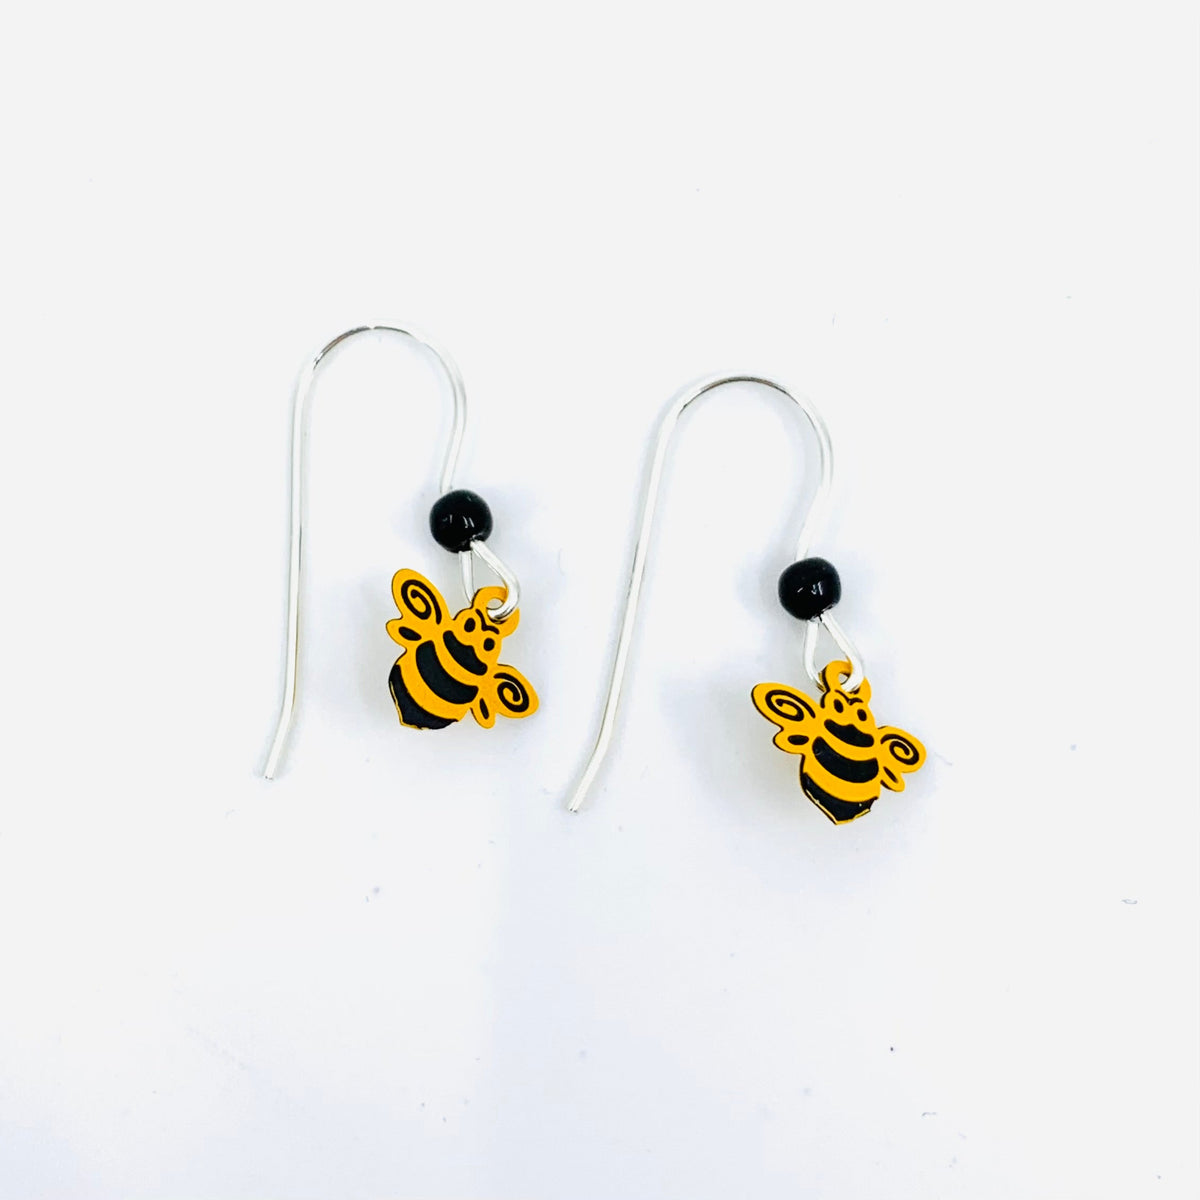 Tiny Whimsical Earrings, Bumblebee Jewelry Sienna Sky 